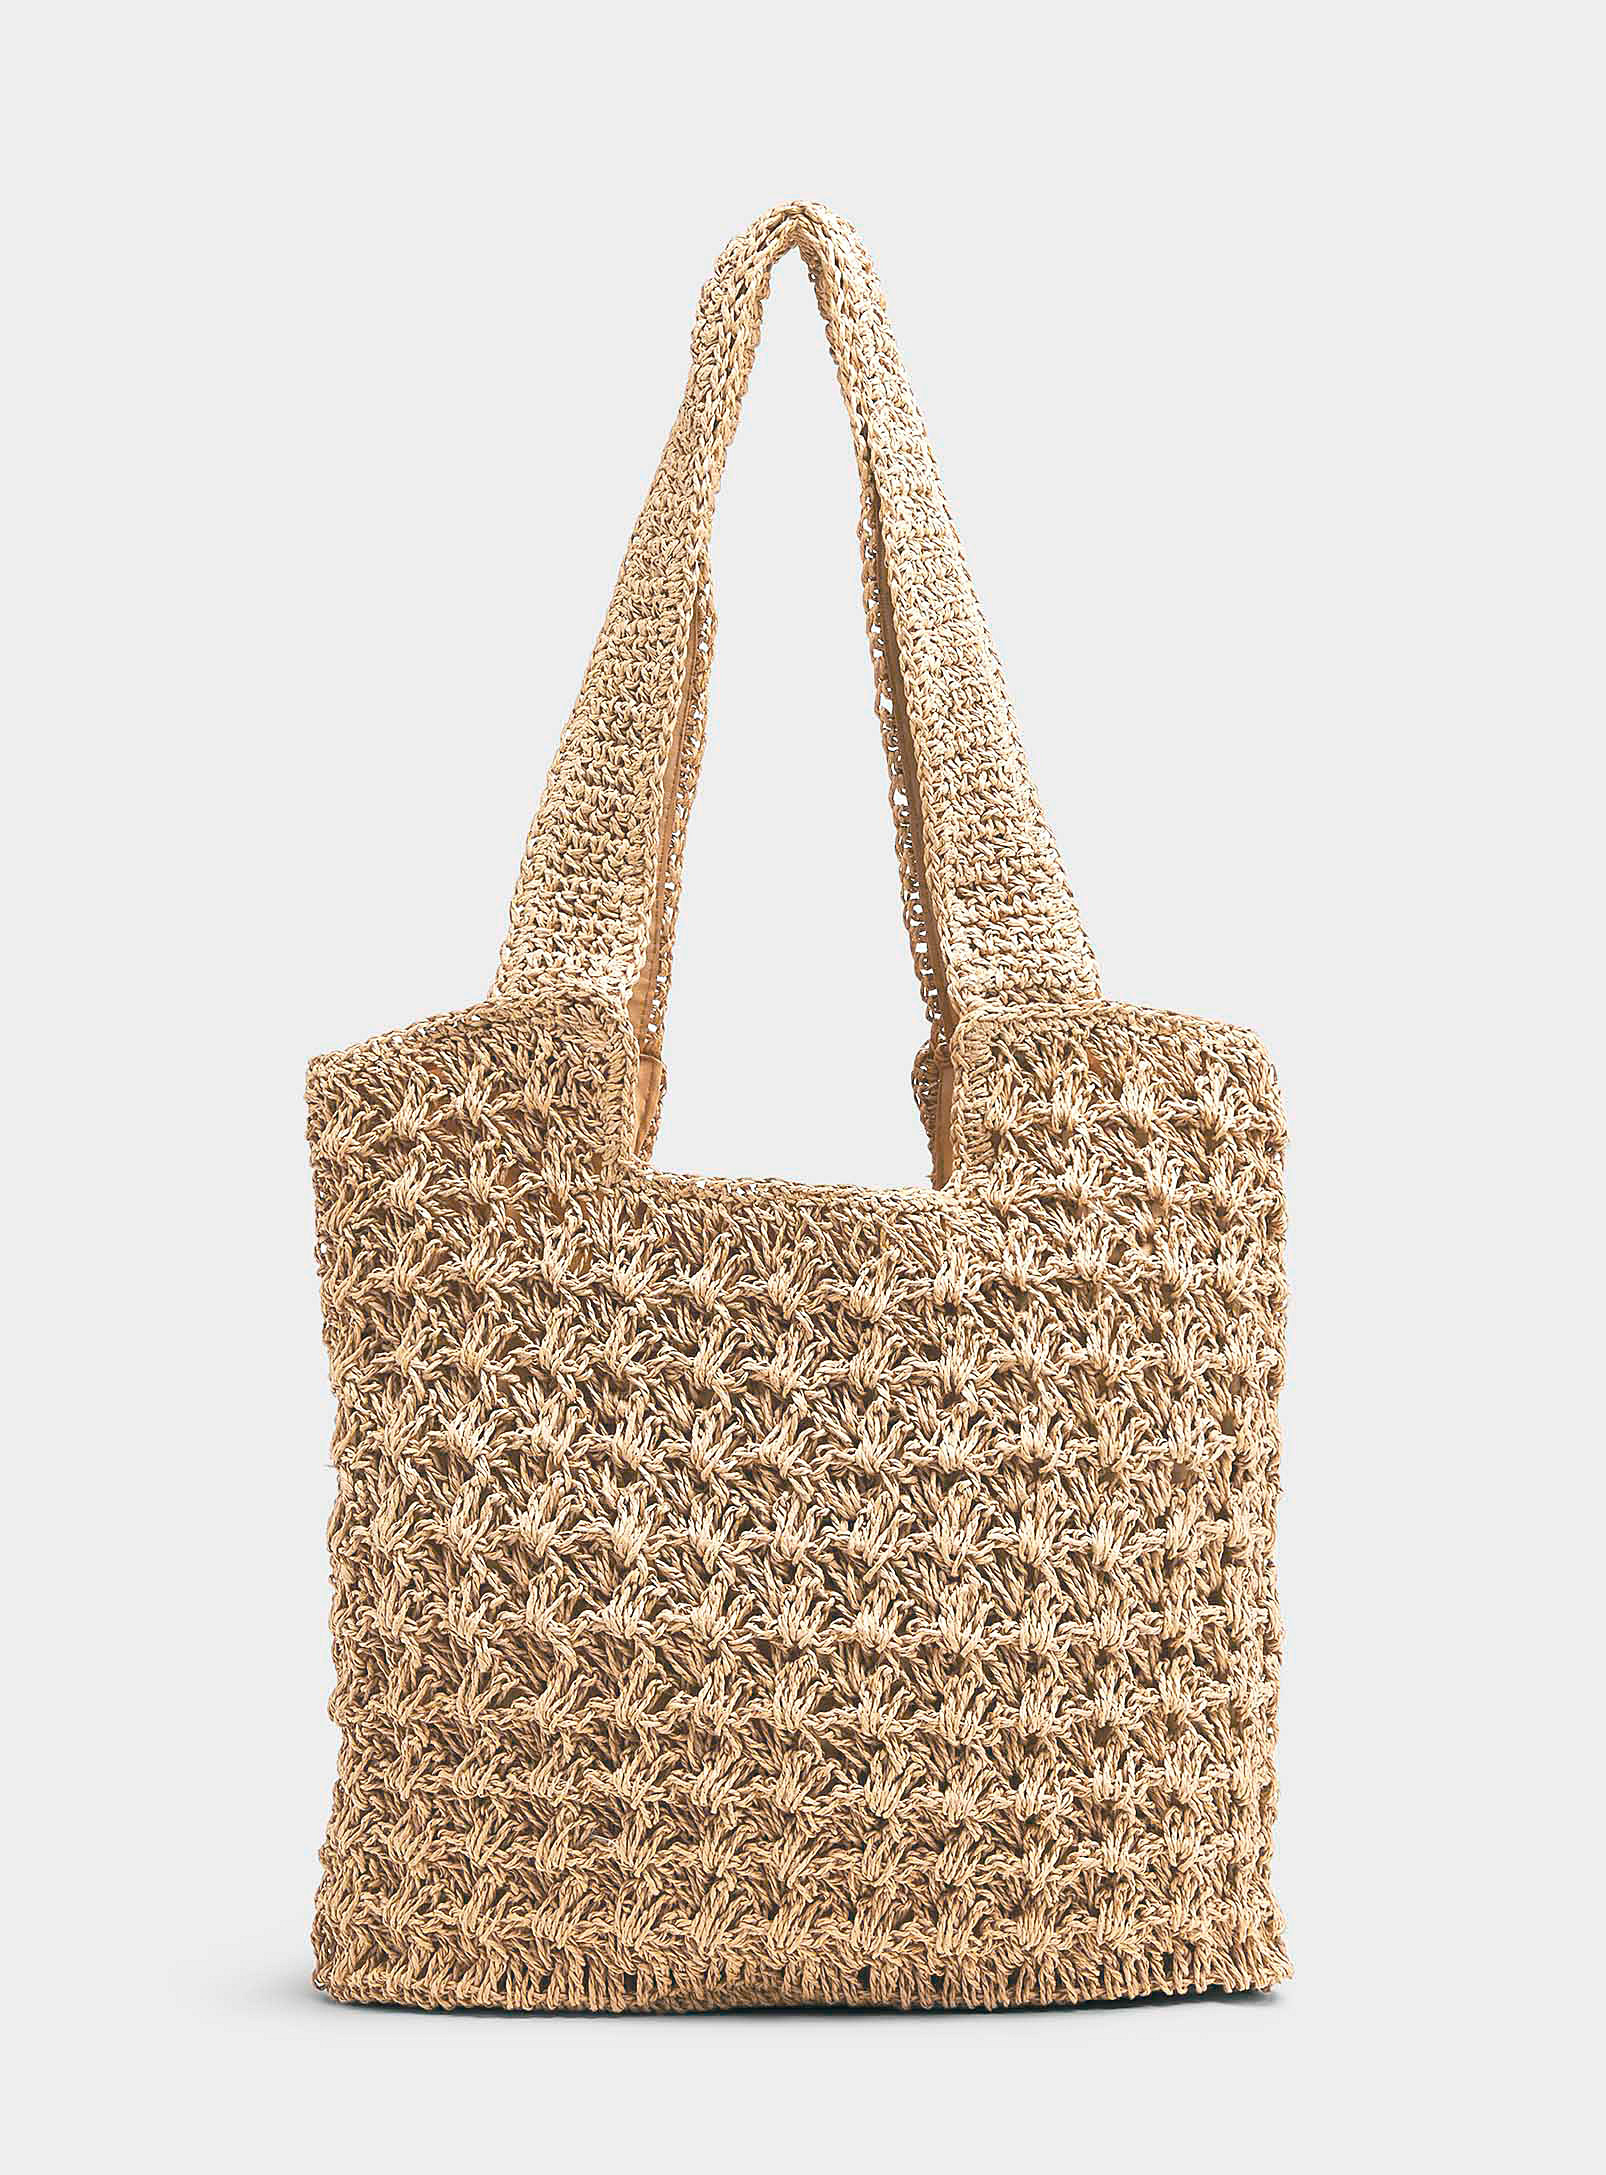 Simons - Women's Braided straw Tote Bag